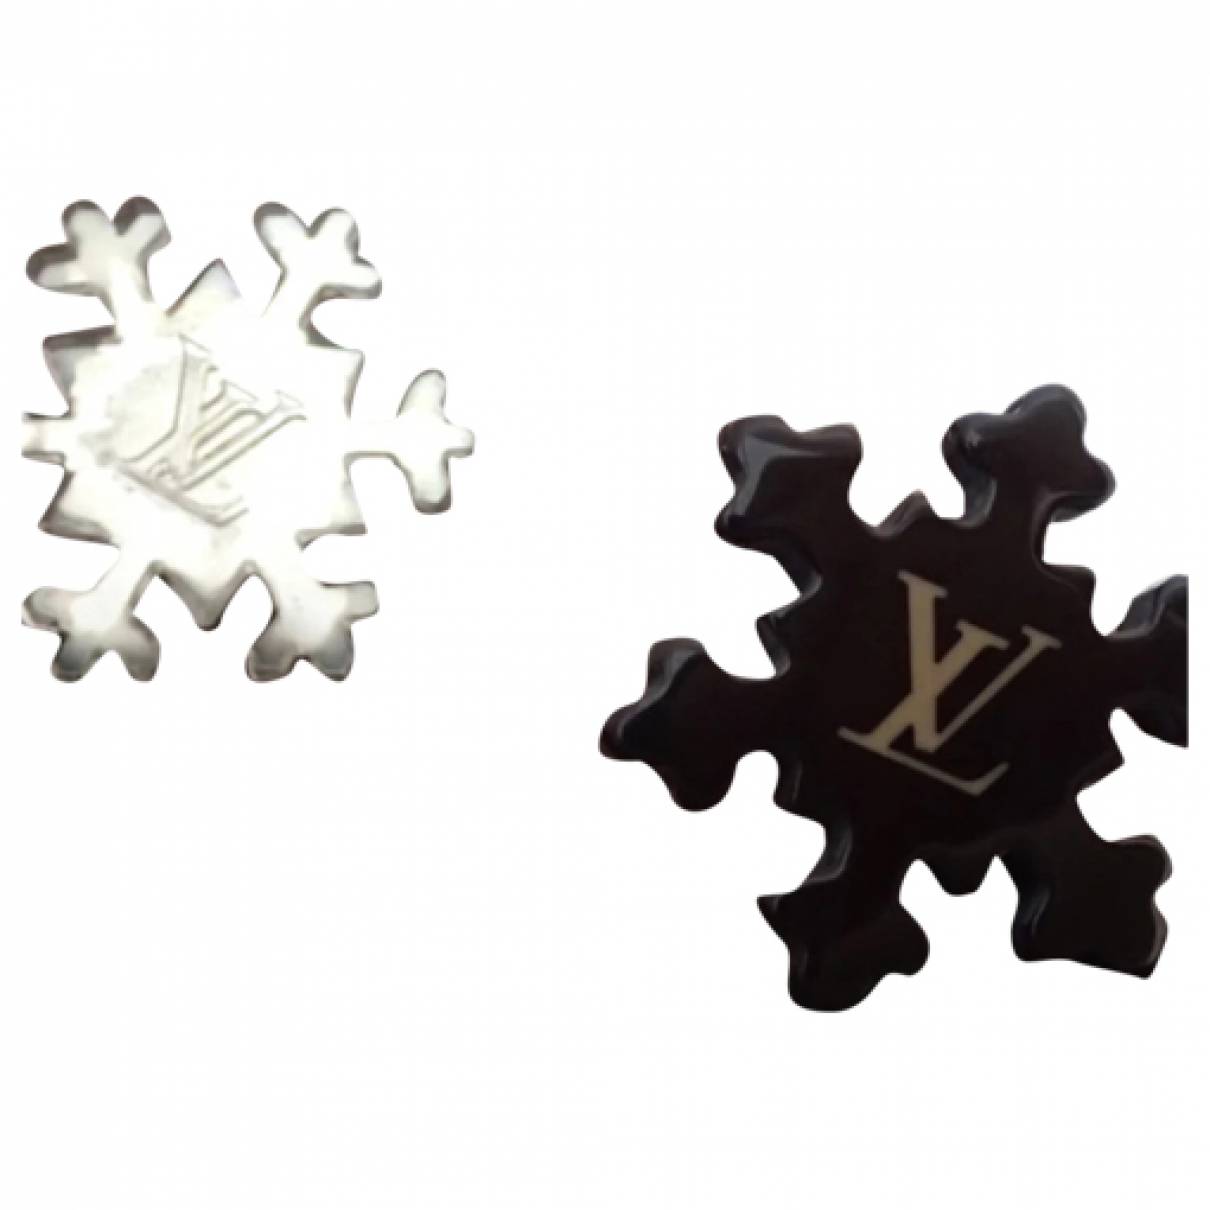 Pen Louis Vuitton Black in Metal - 32111876